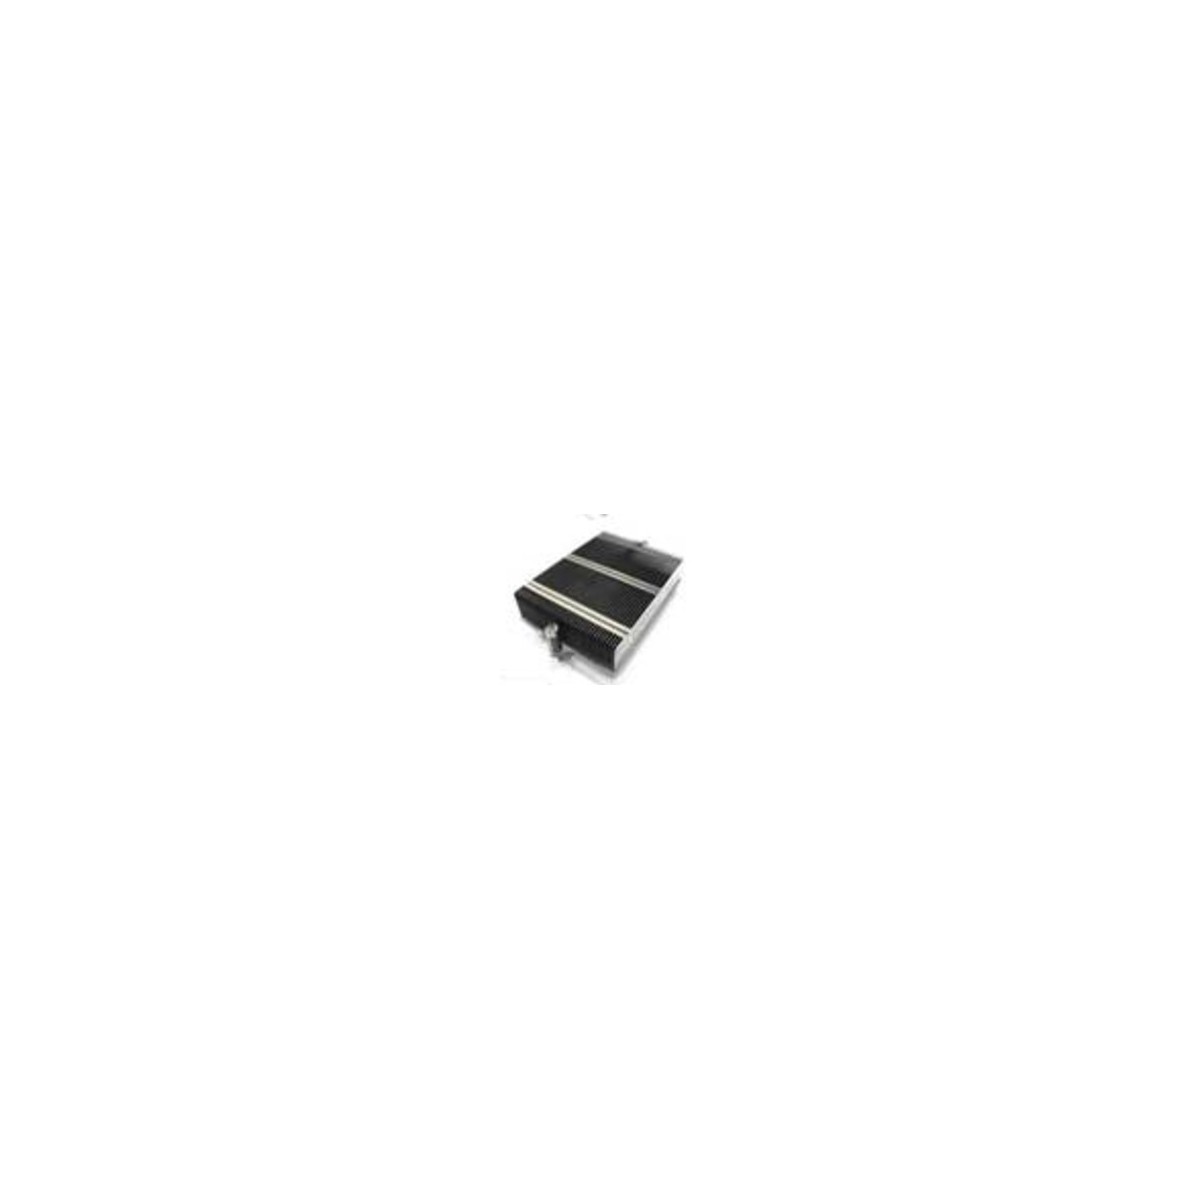 Supermicro SNK-P0044P - Heatsink-Radiatior - Black